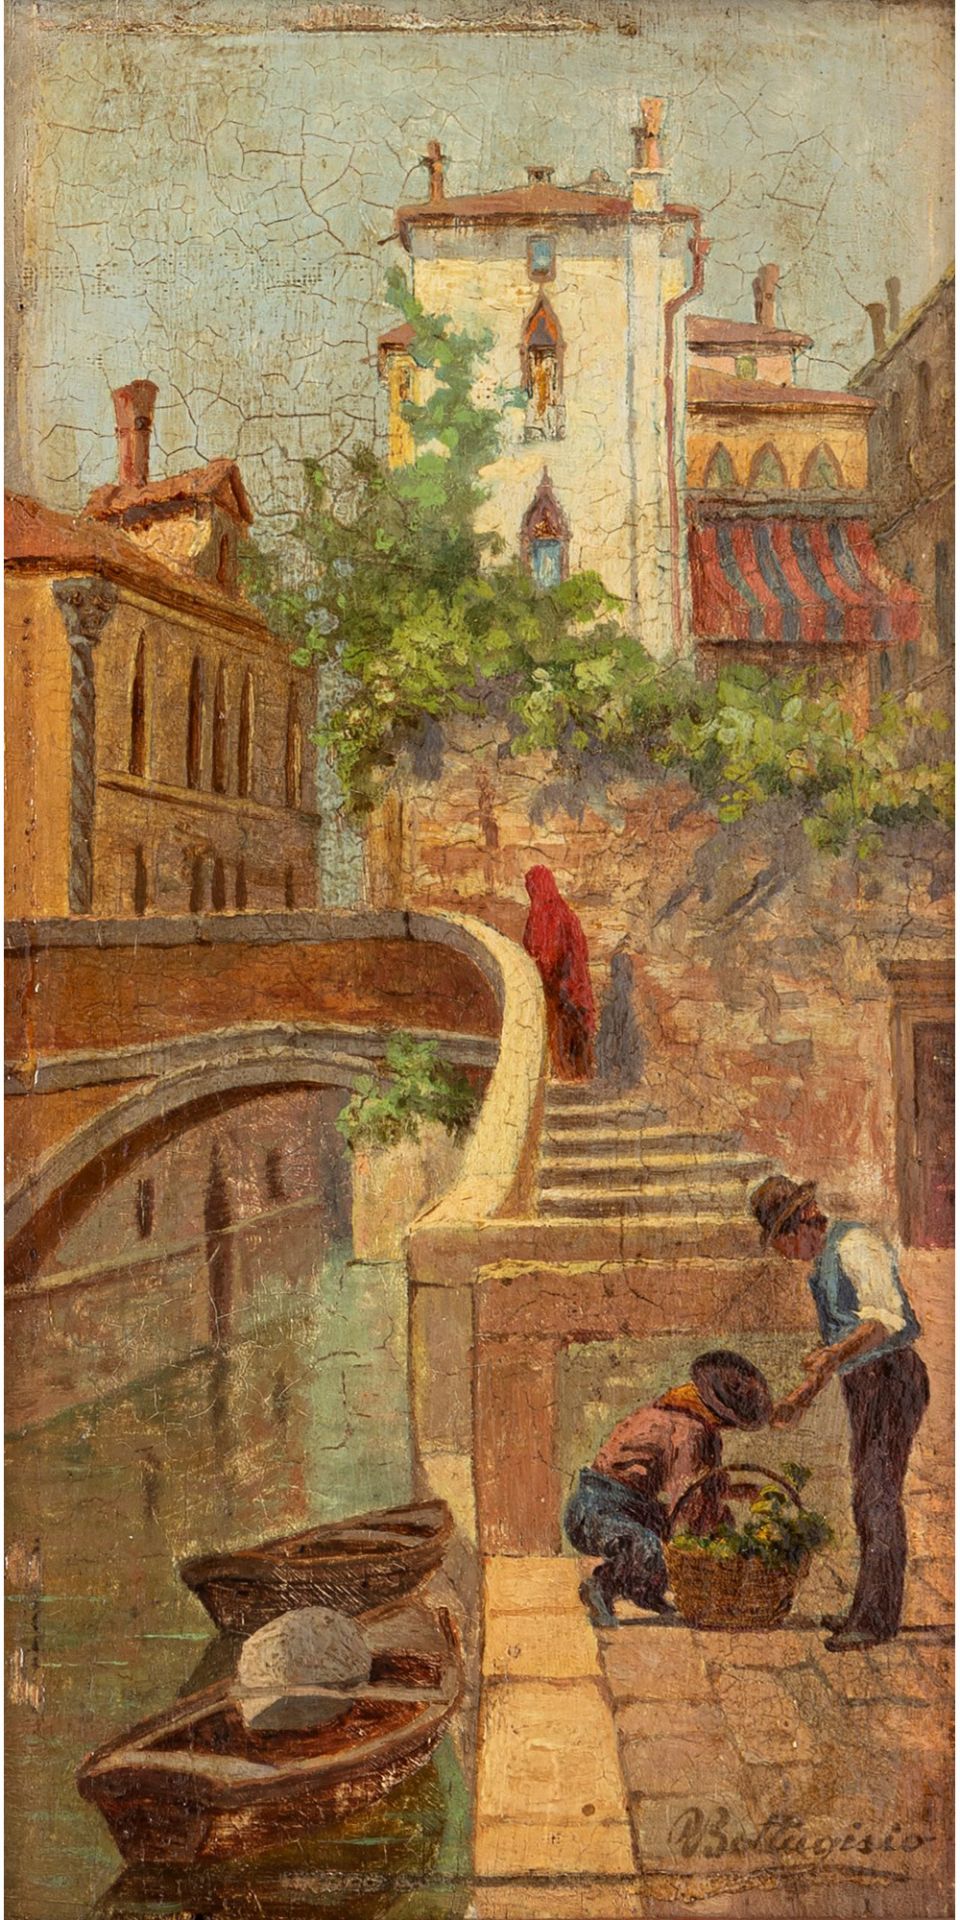 Vittorio Bottagisio (Bardolino 1859-Verona 1905) - Seller in Venice